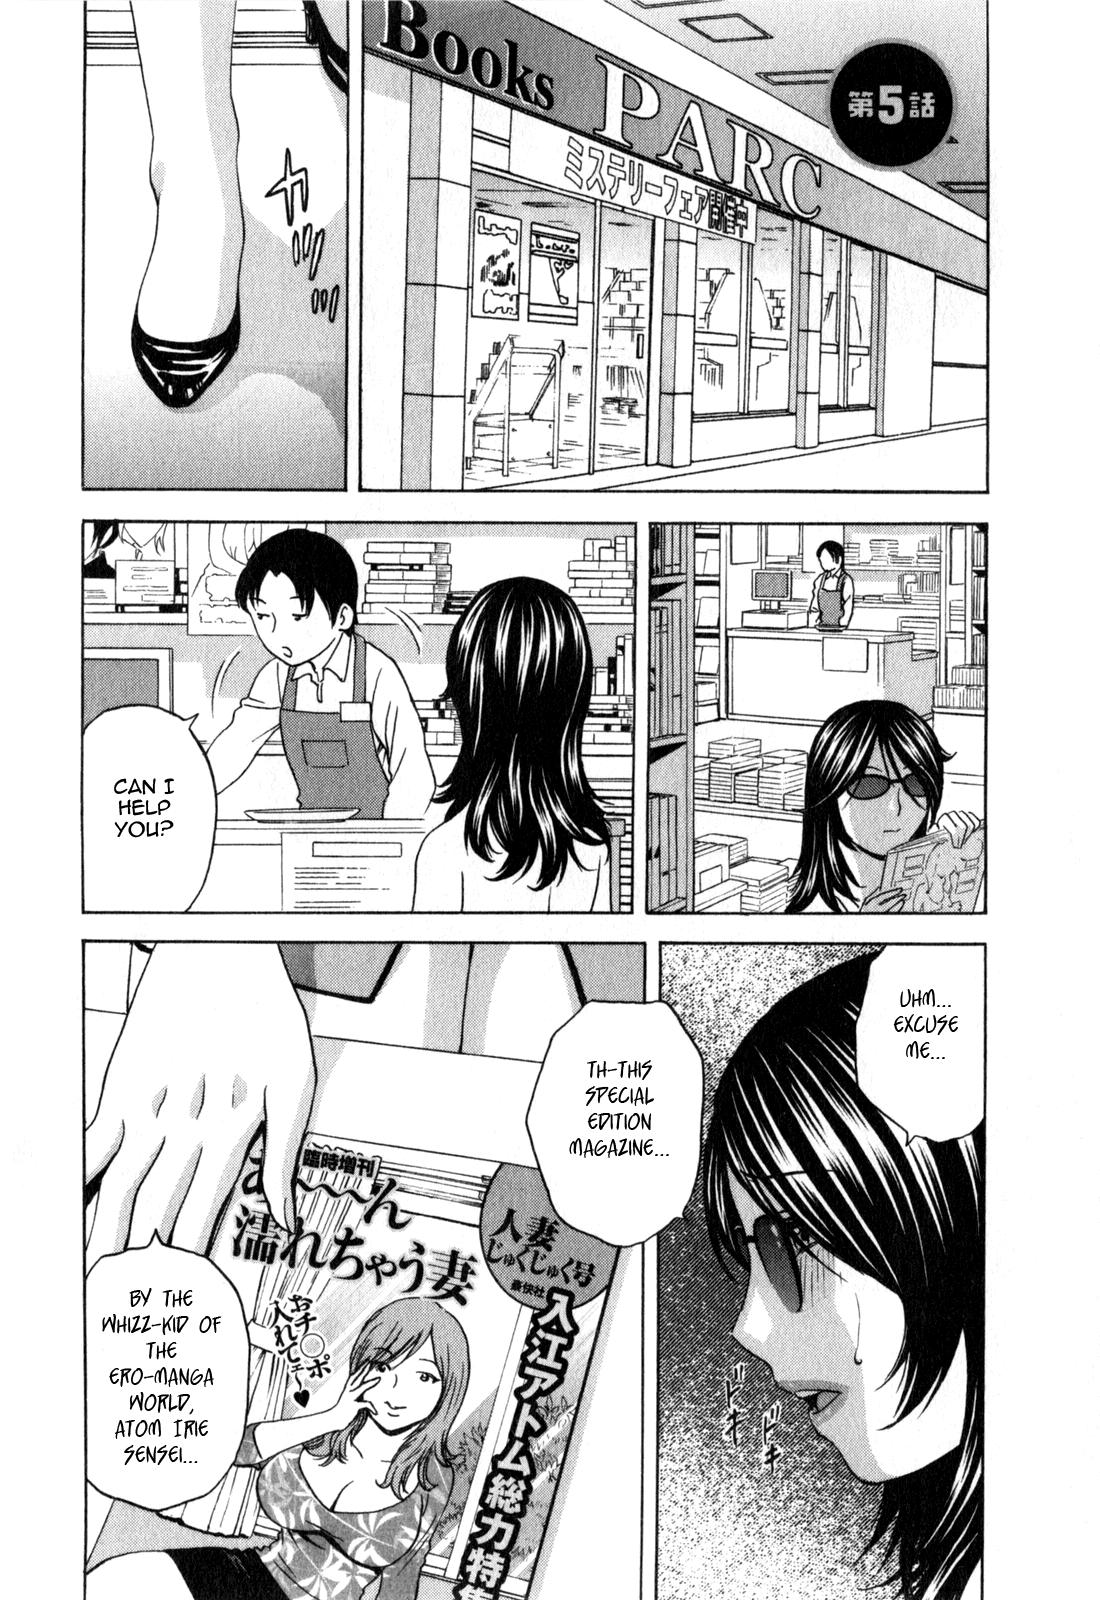 [Hidemaru] Life with Married Women Just Like a Manga 3 - Ch. 1-8 [English] {Tadanohito} 86